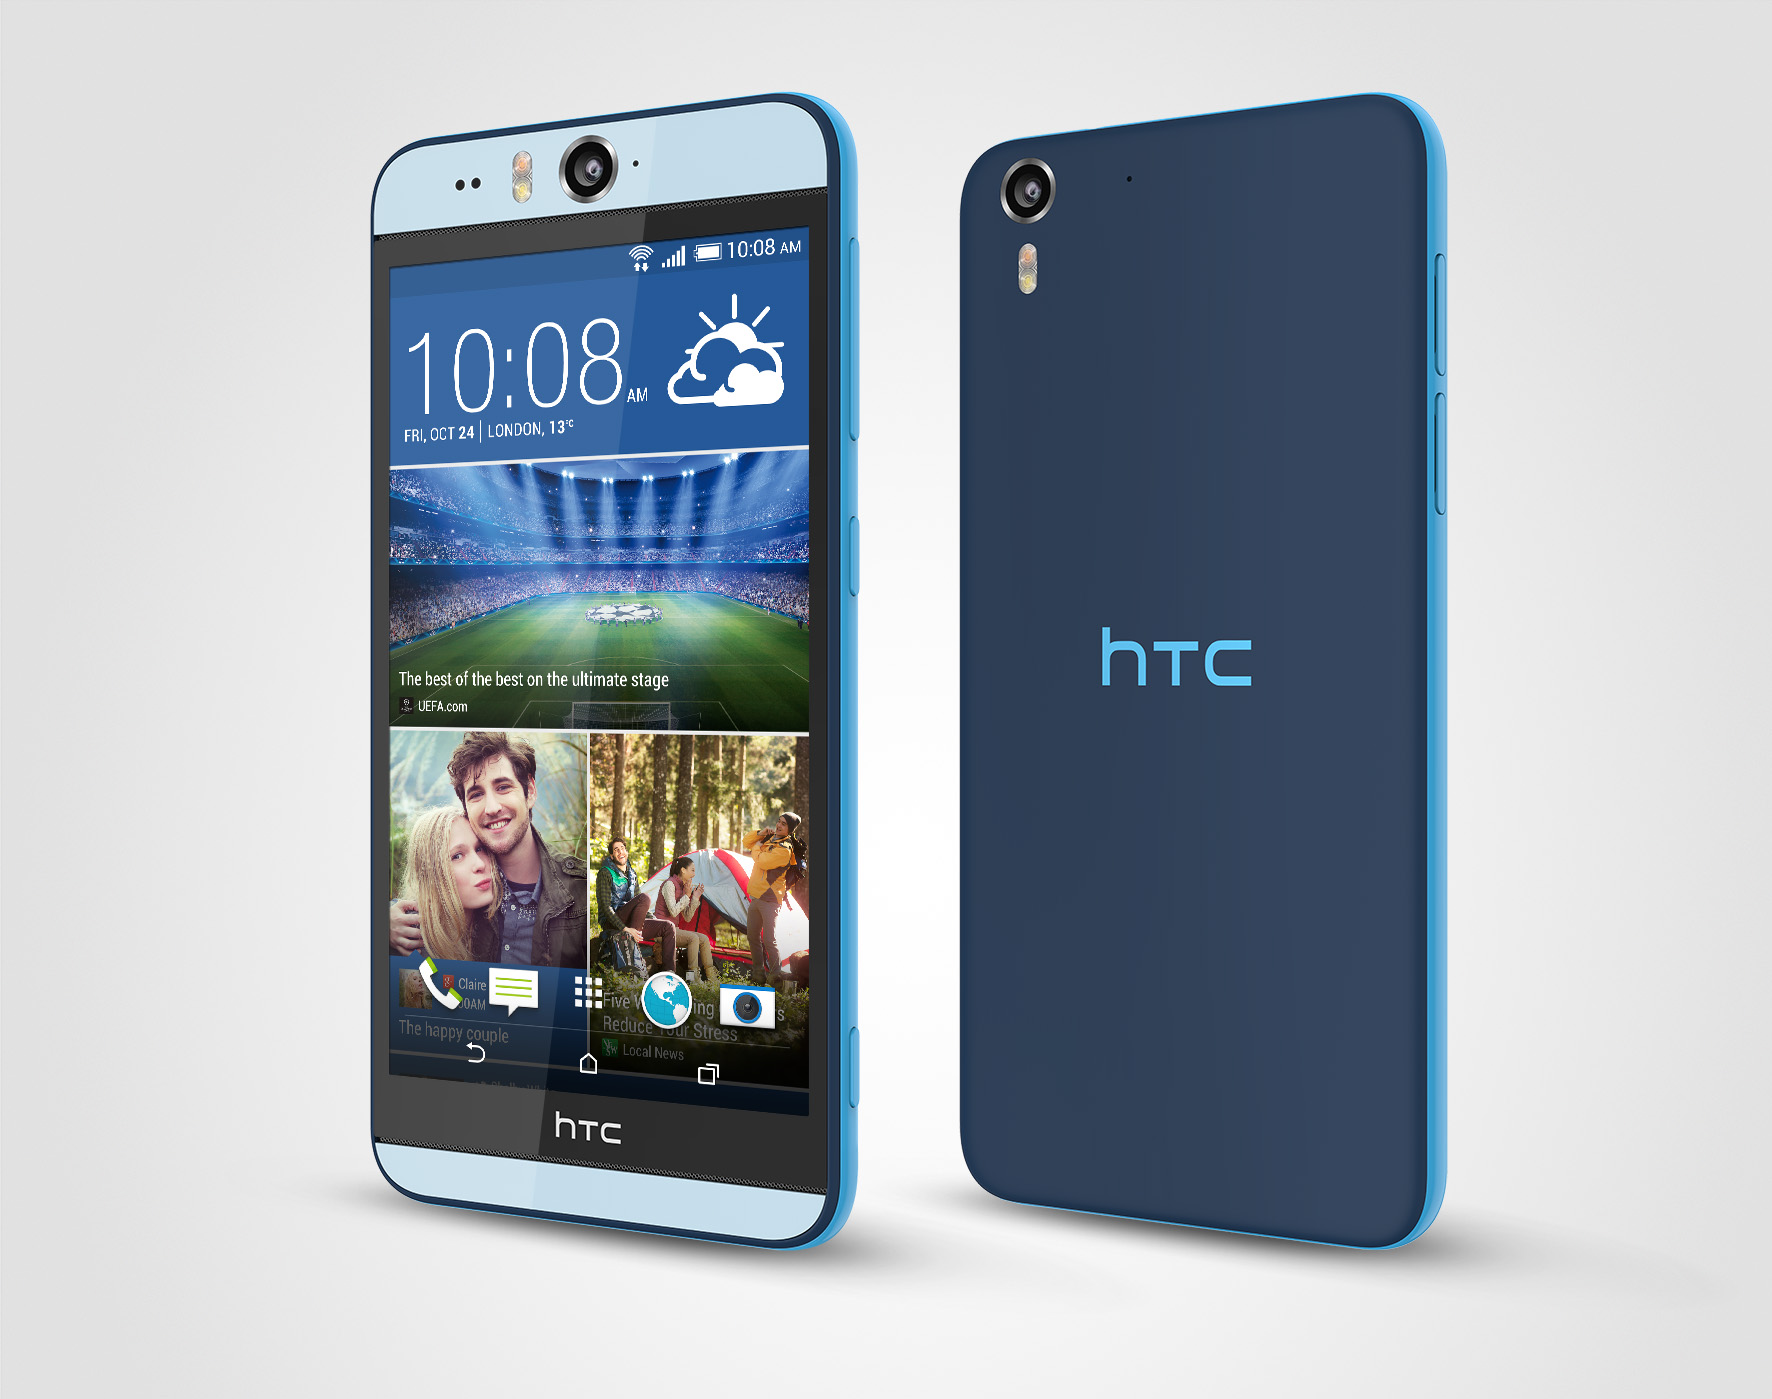 HTC Desire EYE and HTC Desire 816 updated to Lollipop 1